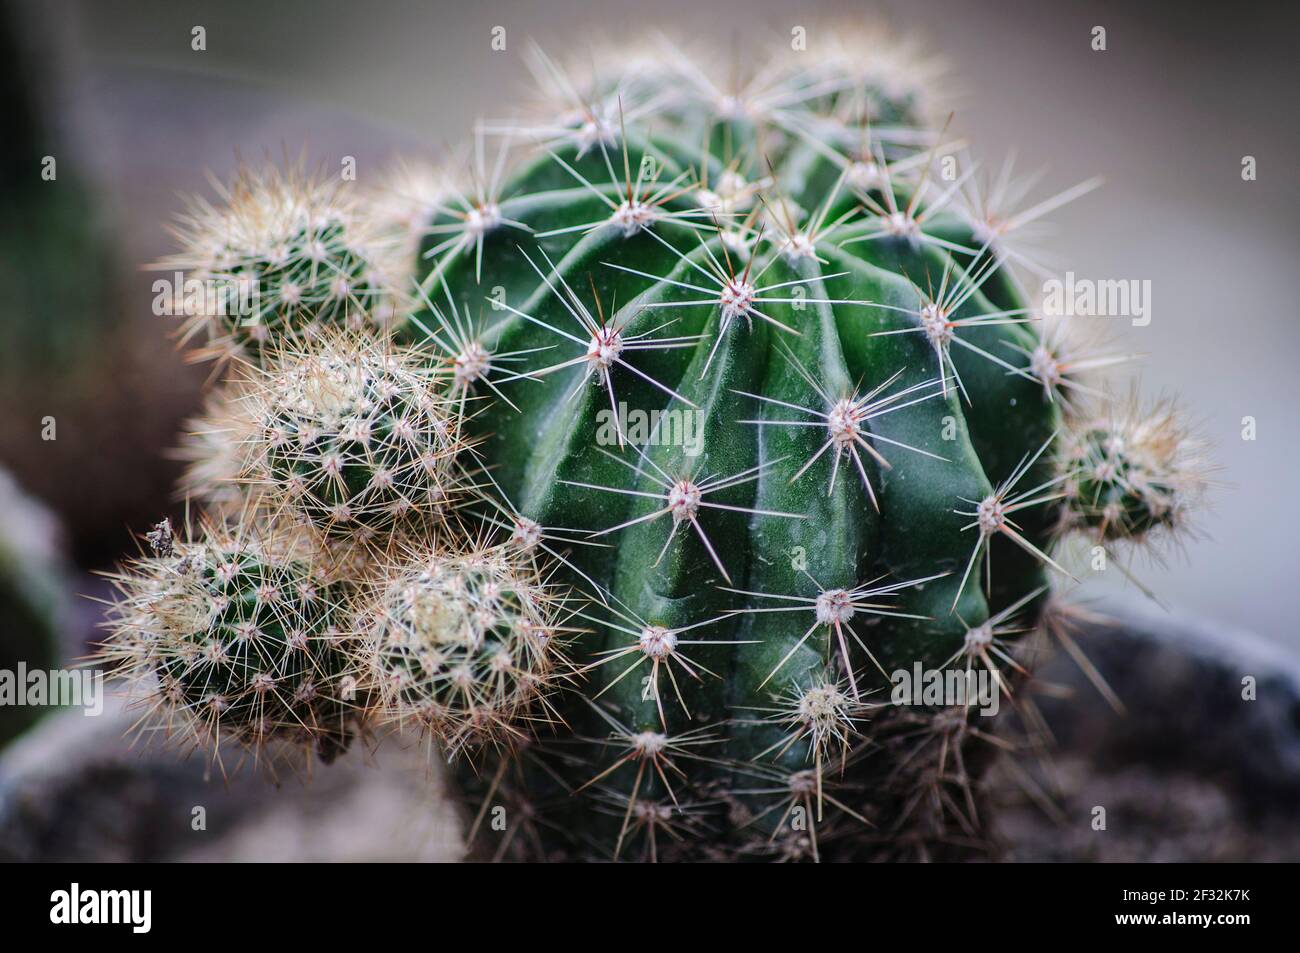 Cactus in the garden, details Stock Photo